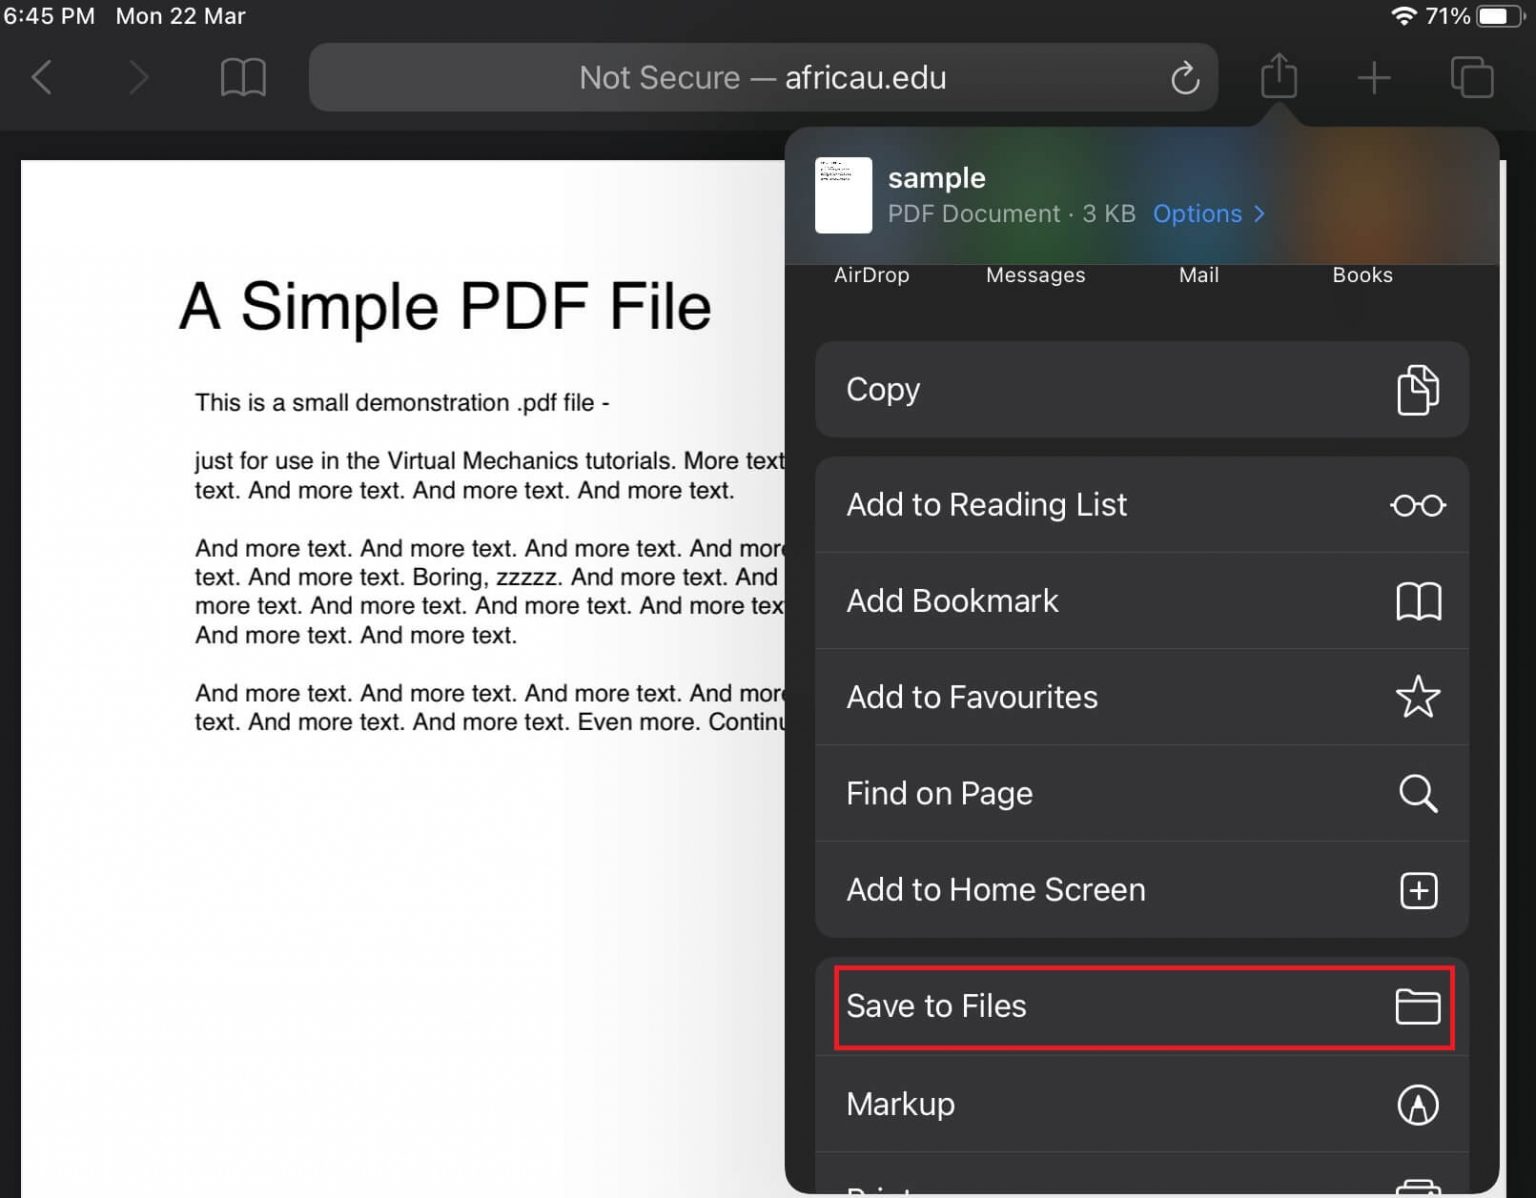 safari and pdf on ipad